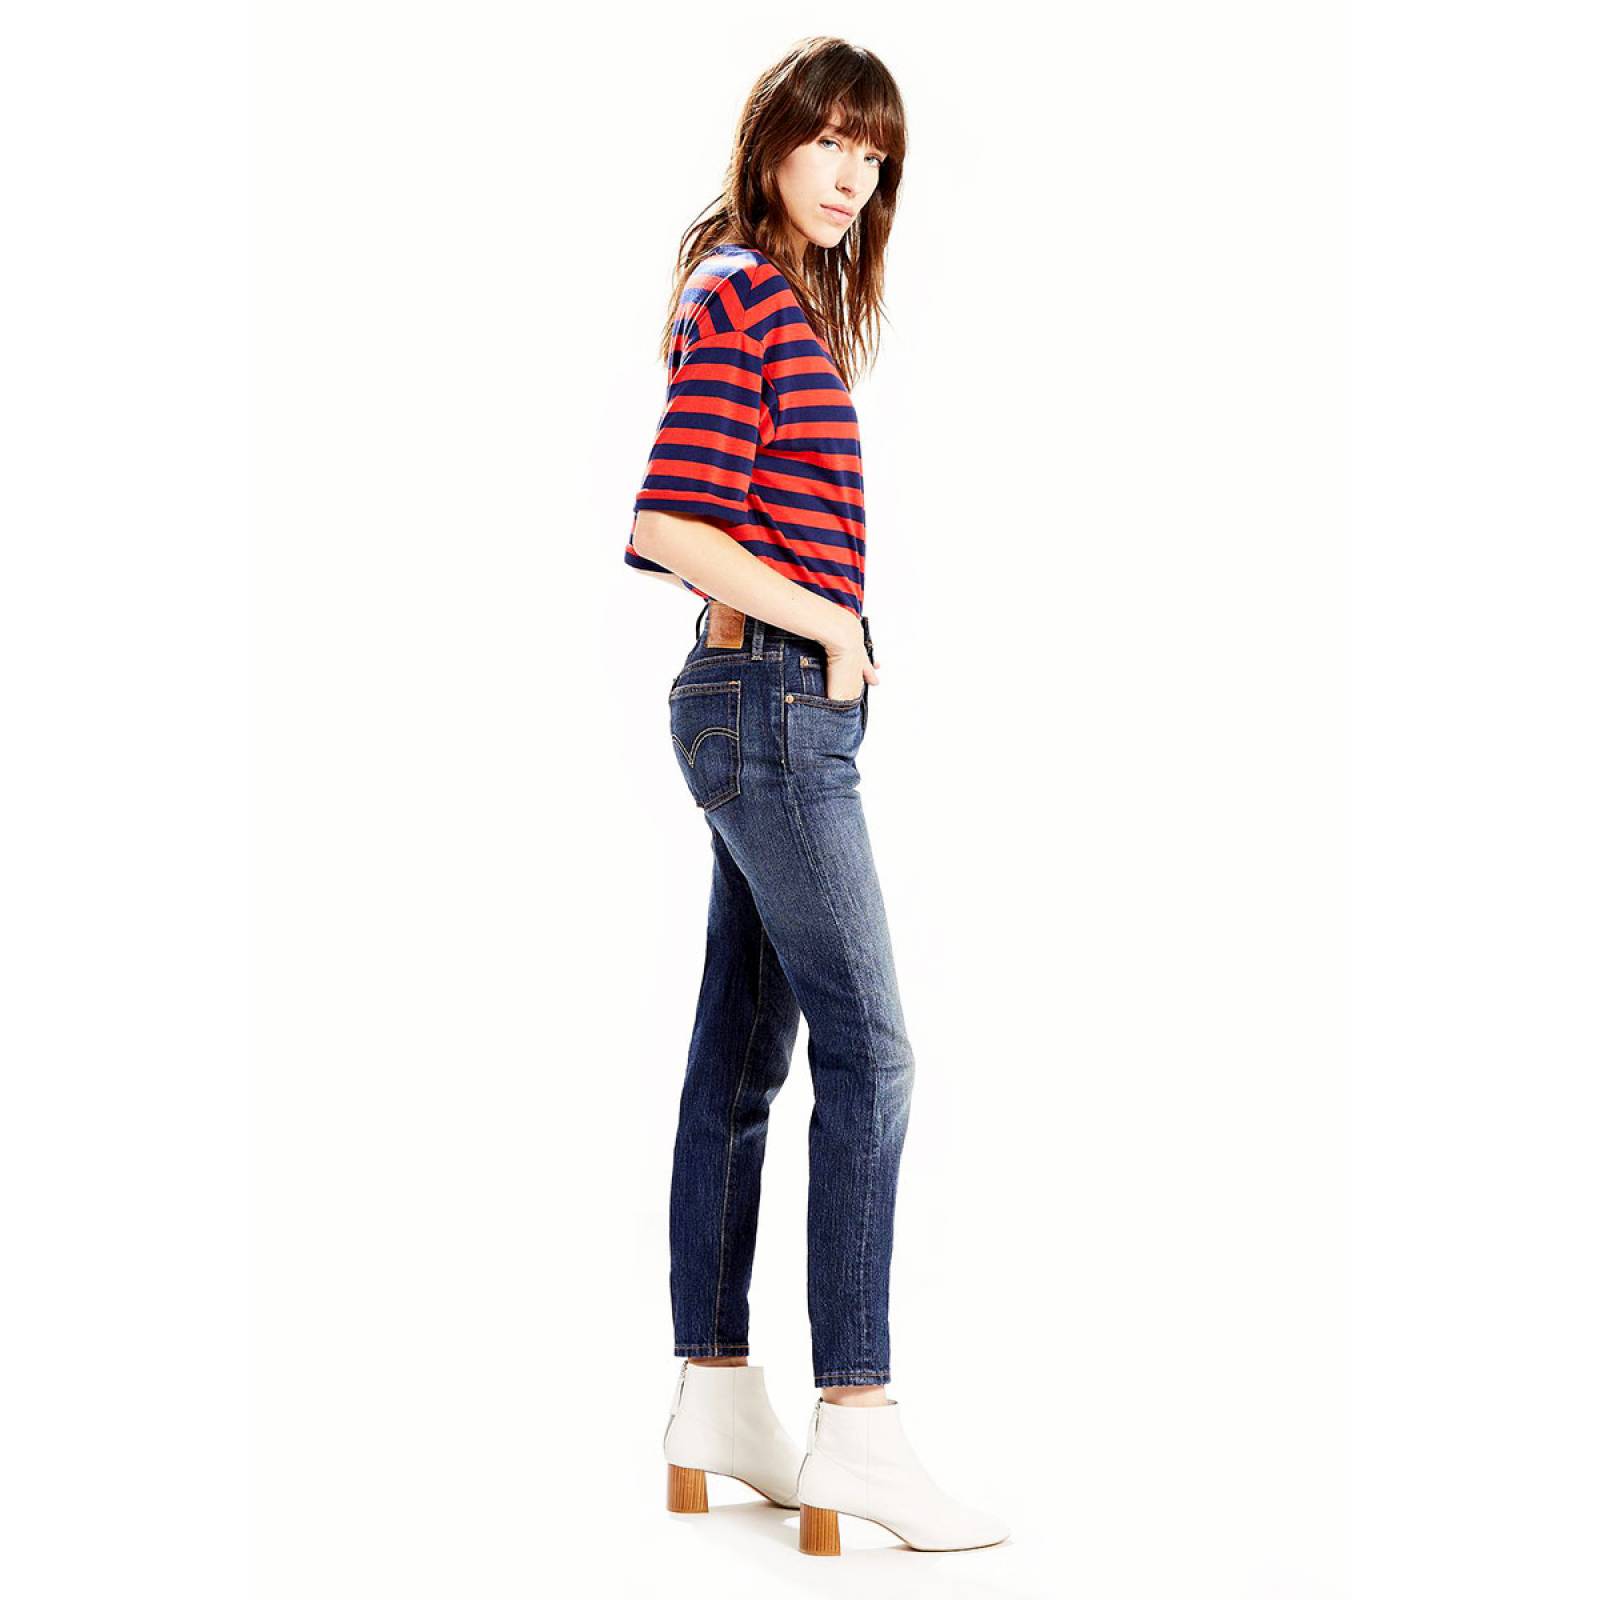 Jeans 501 Skinny para Dama